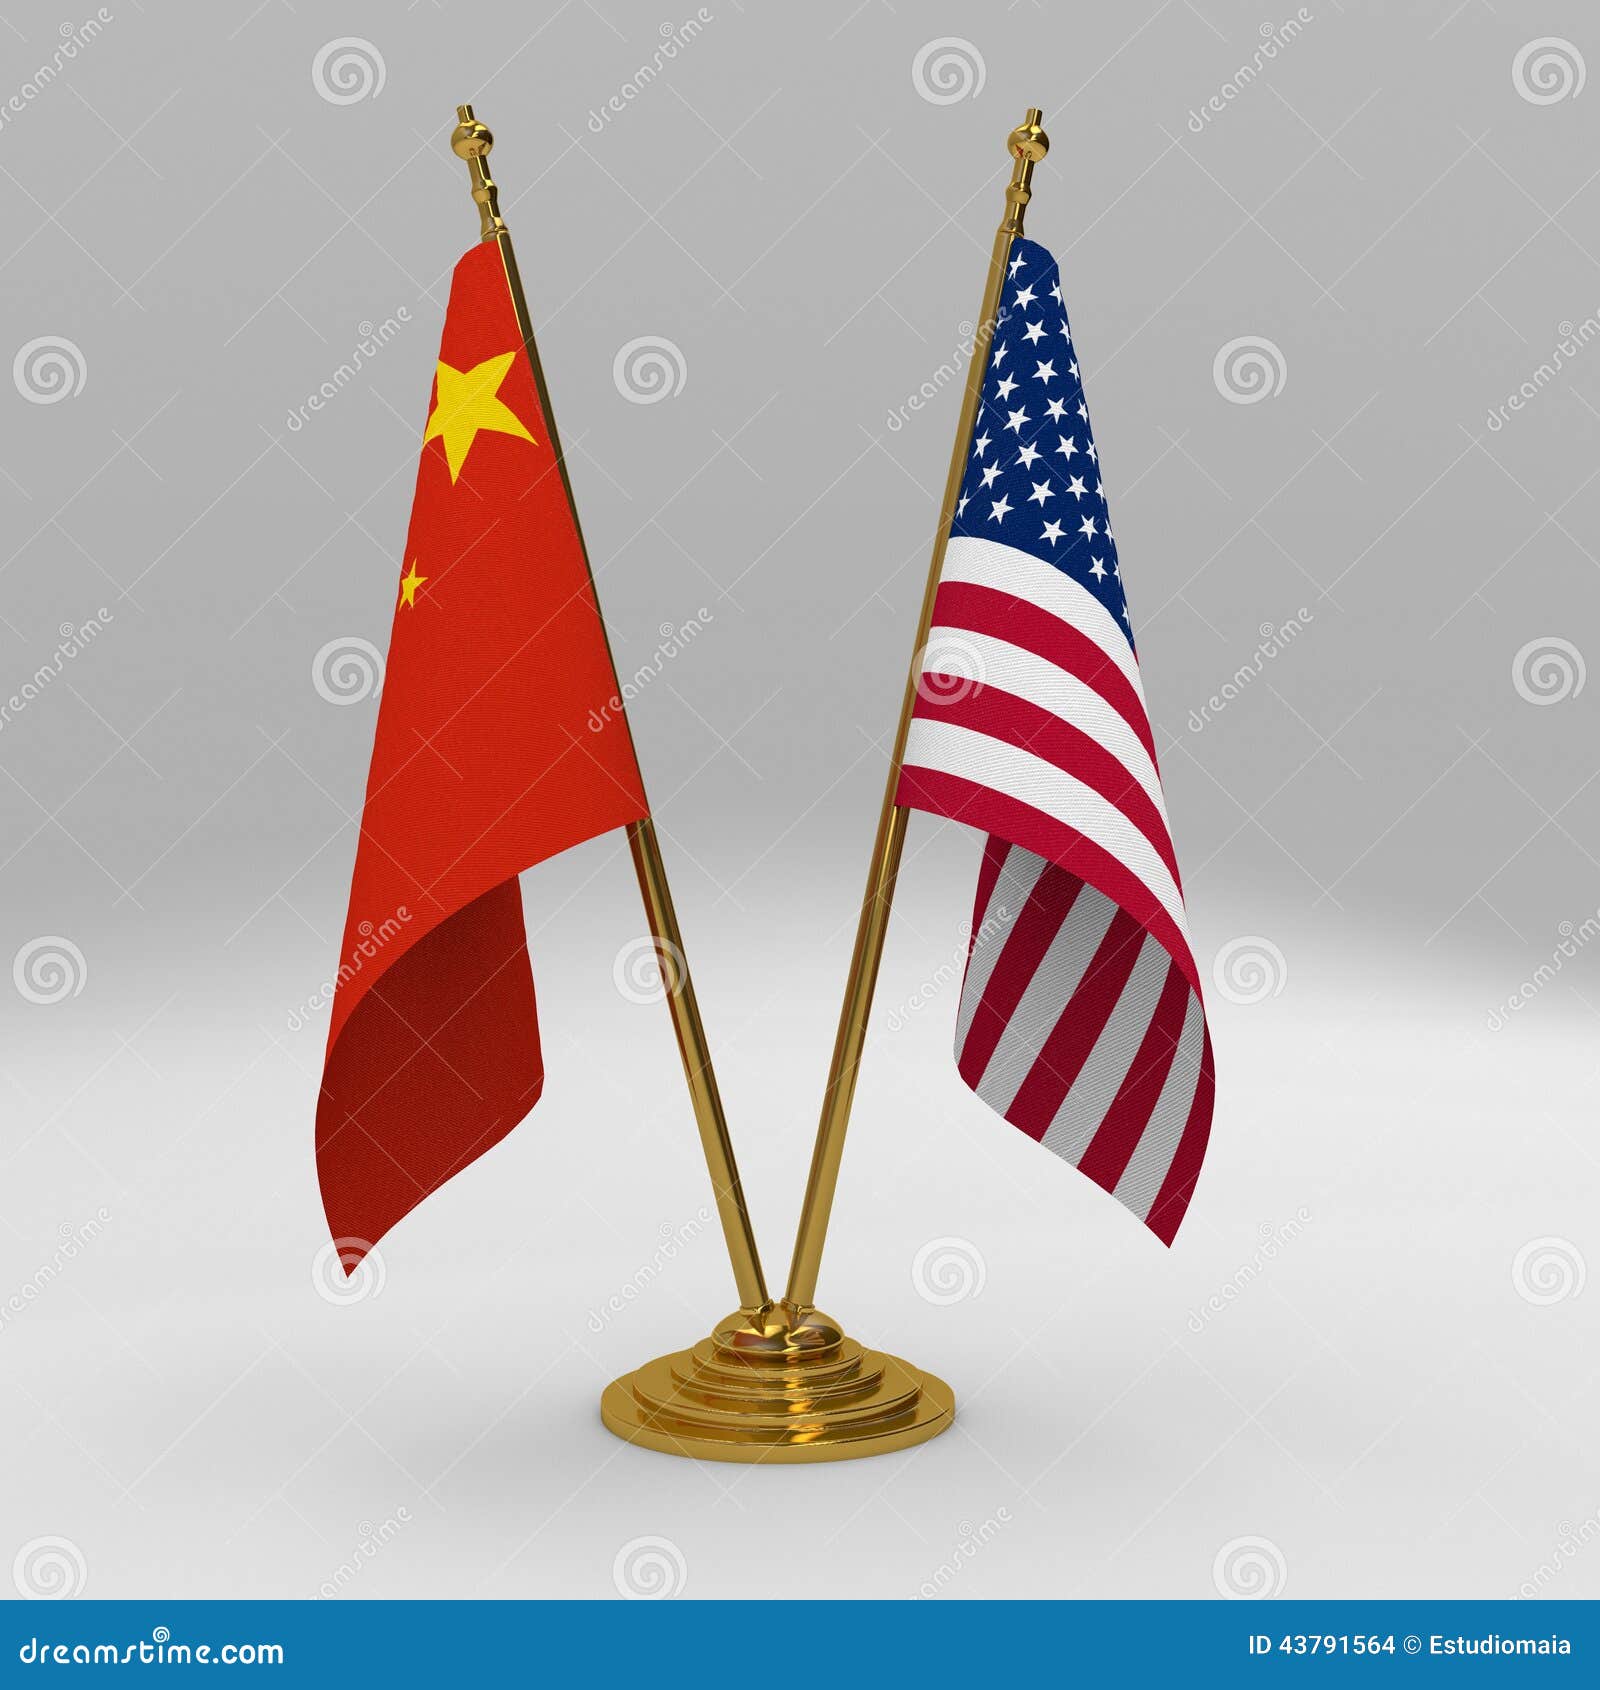 United States of America & Florida Double Friendship Table Flag Set 